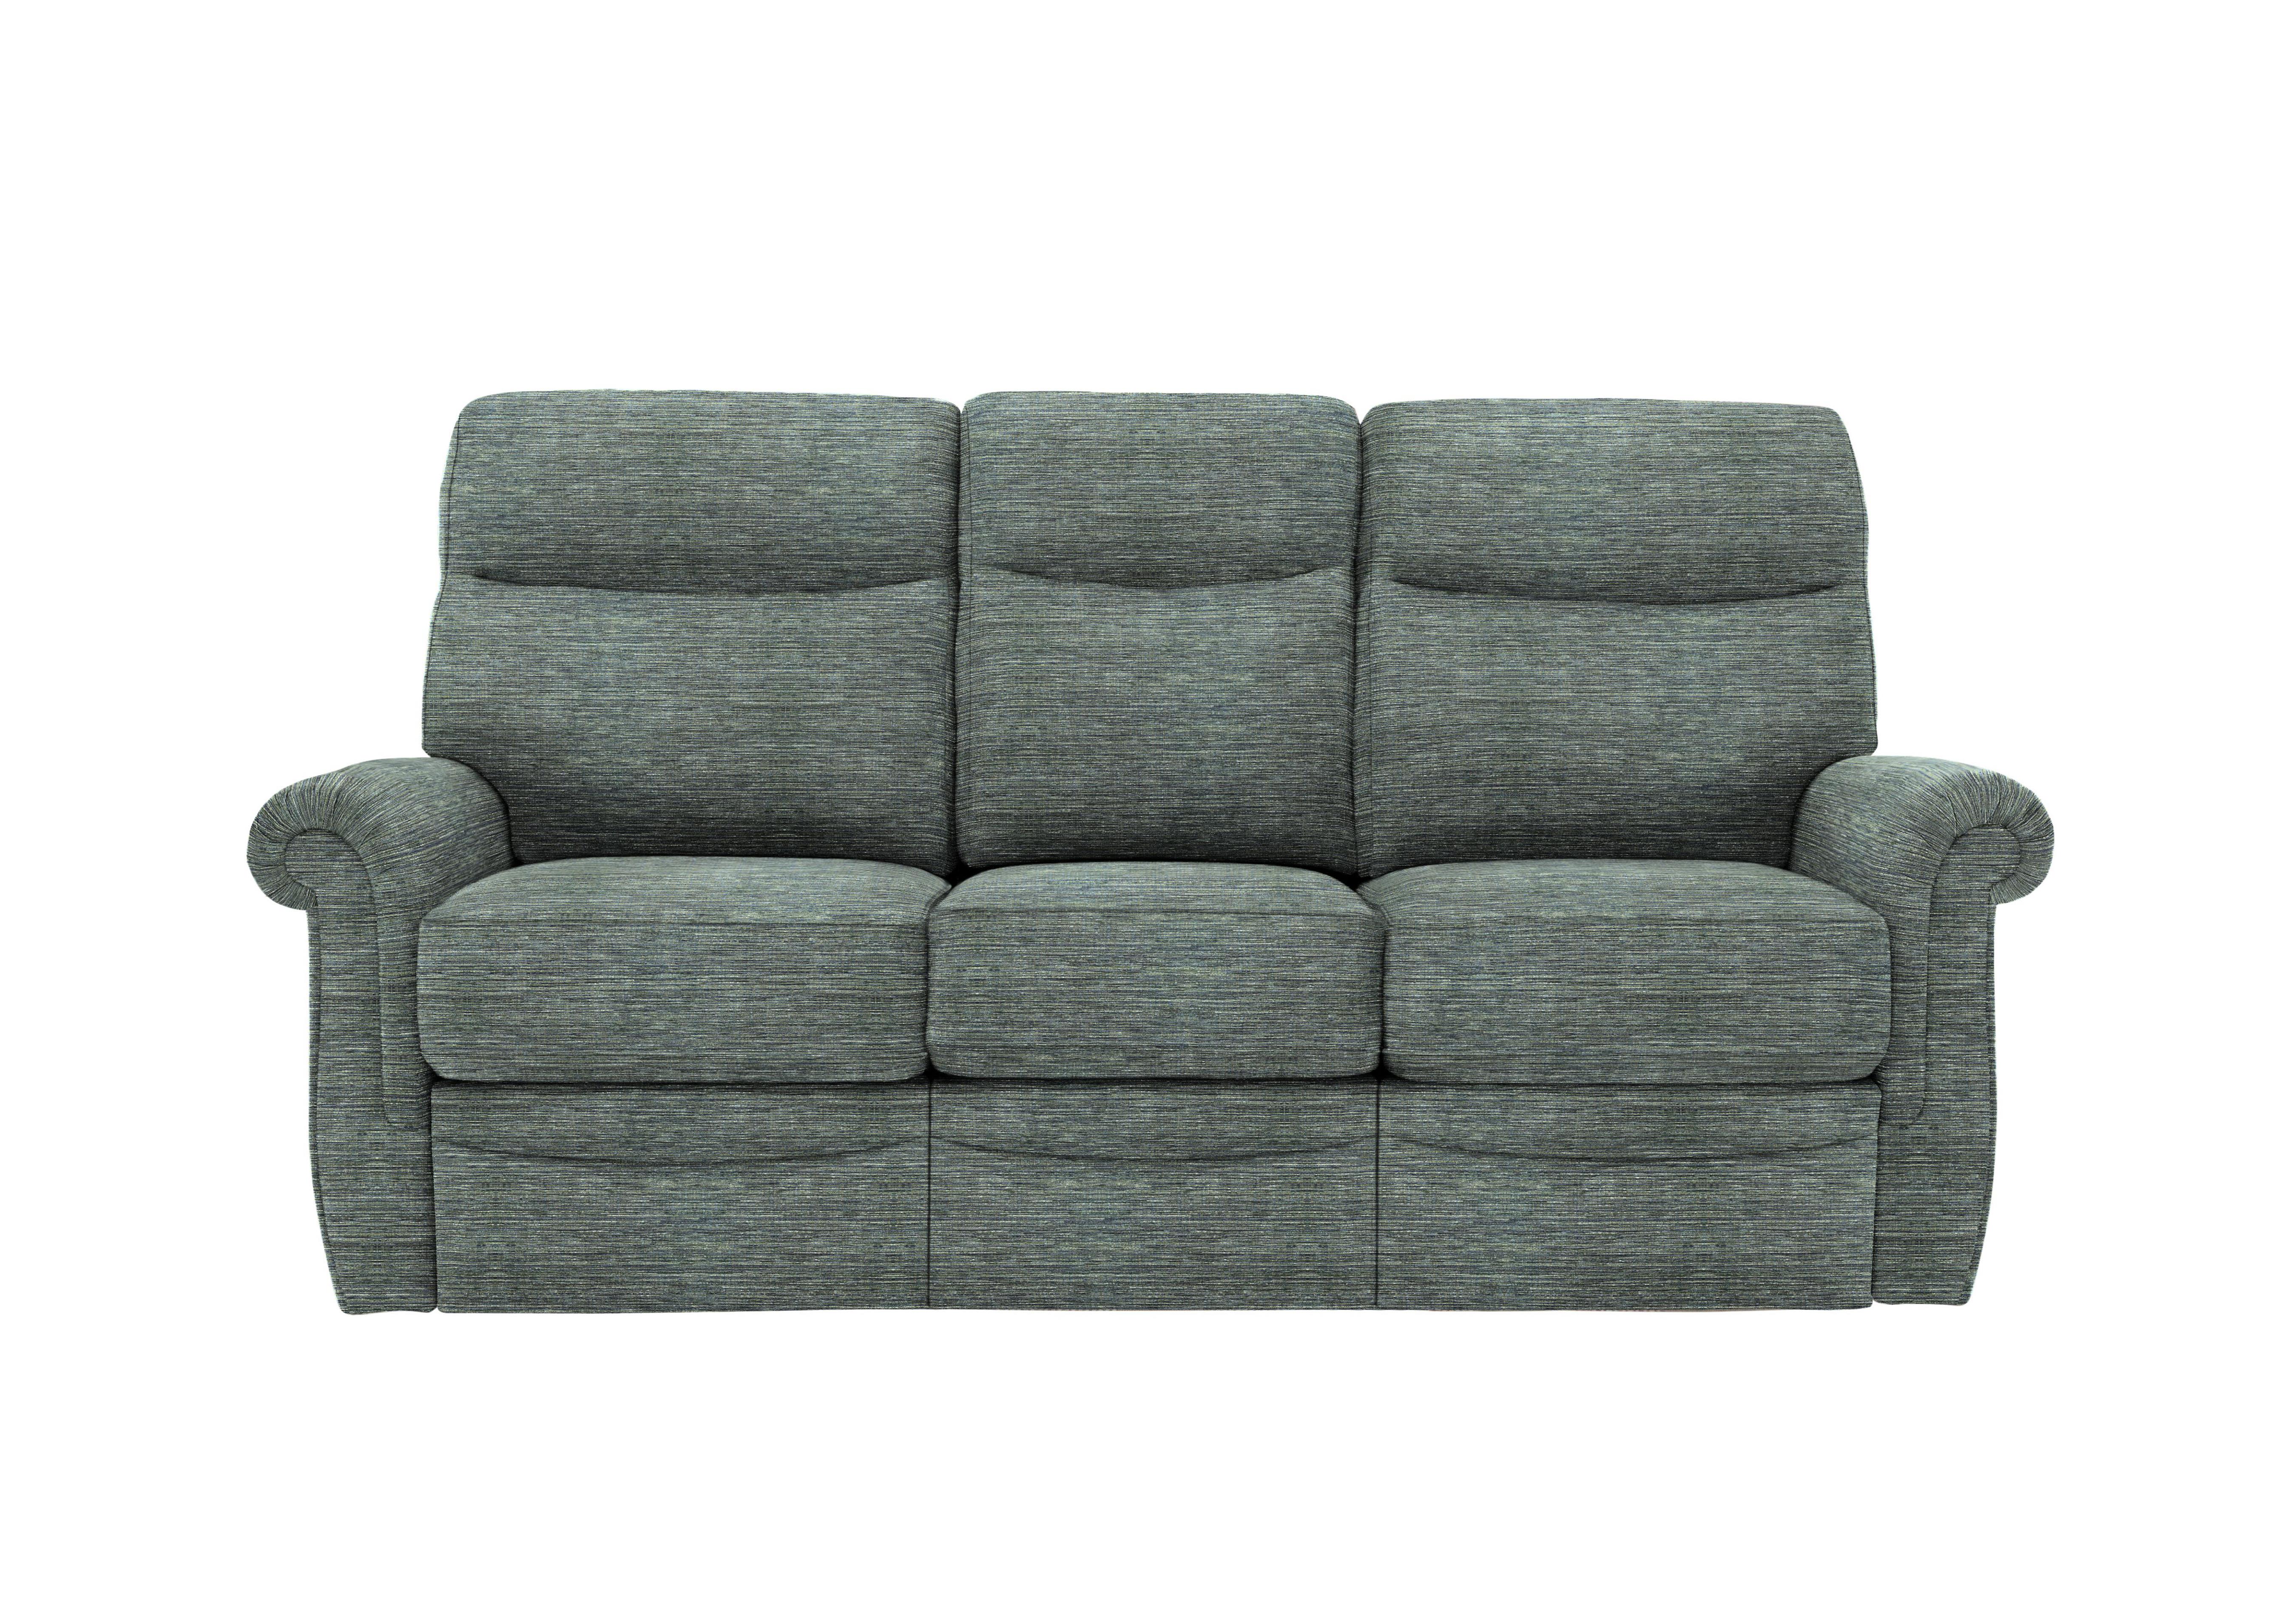 Avon 3 Seater Fabric Sofa in B925 Waffle Marine on Furniture Village